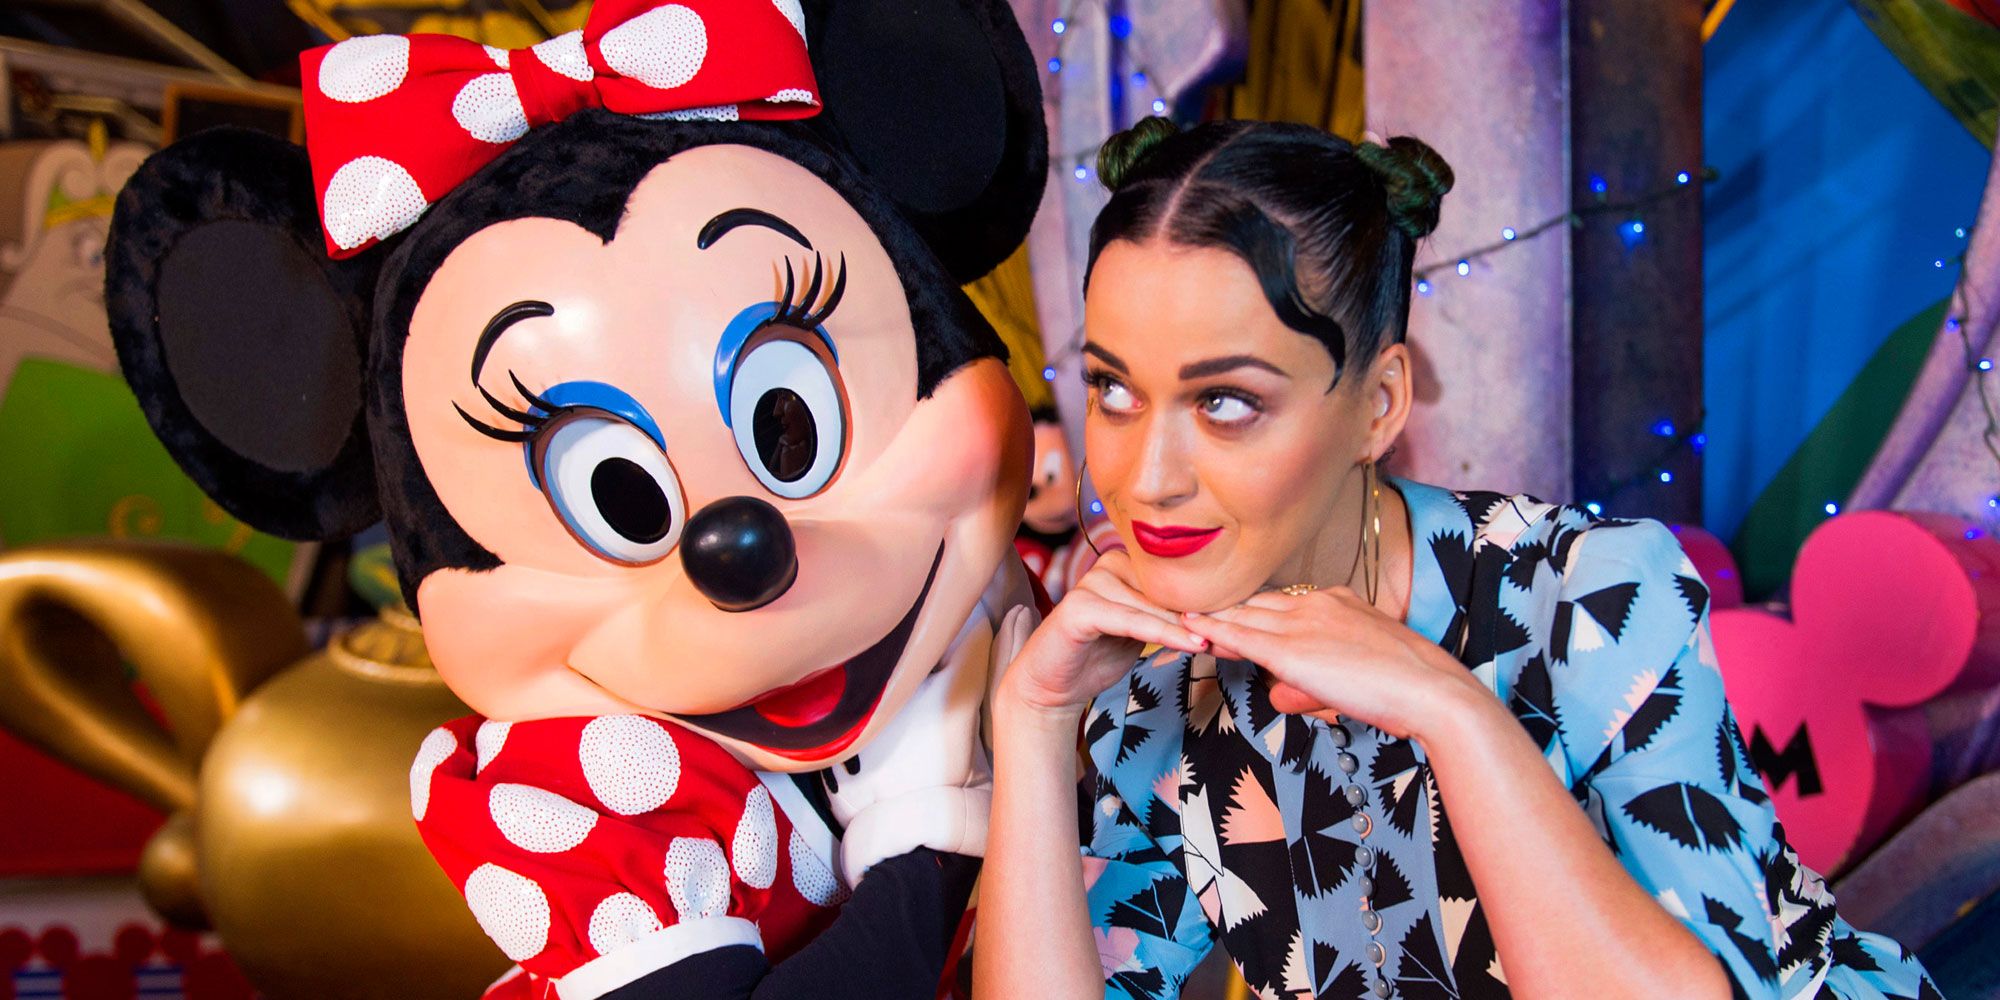 Katy Perry at Shanghai Disney With Orlando Bloom - Katy Perry Instagram  Stories of Disneyland